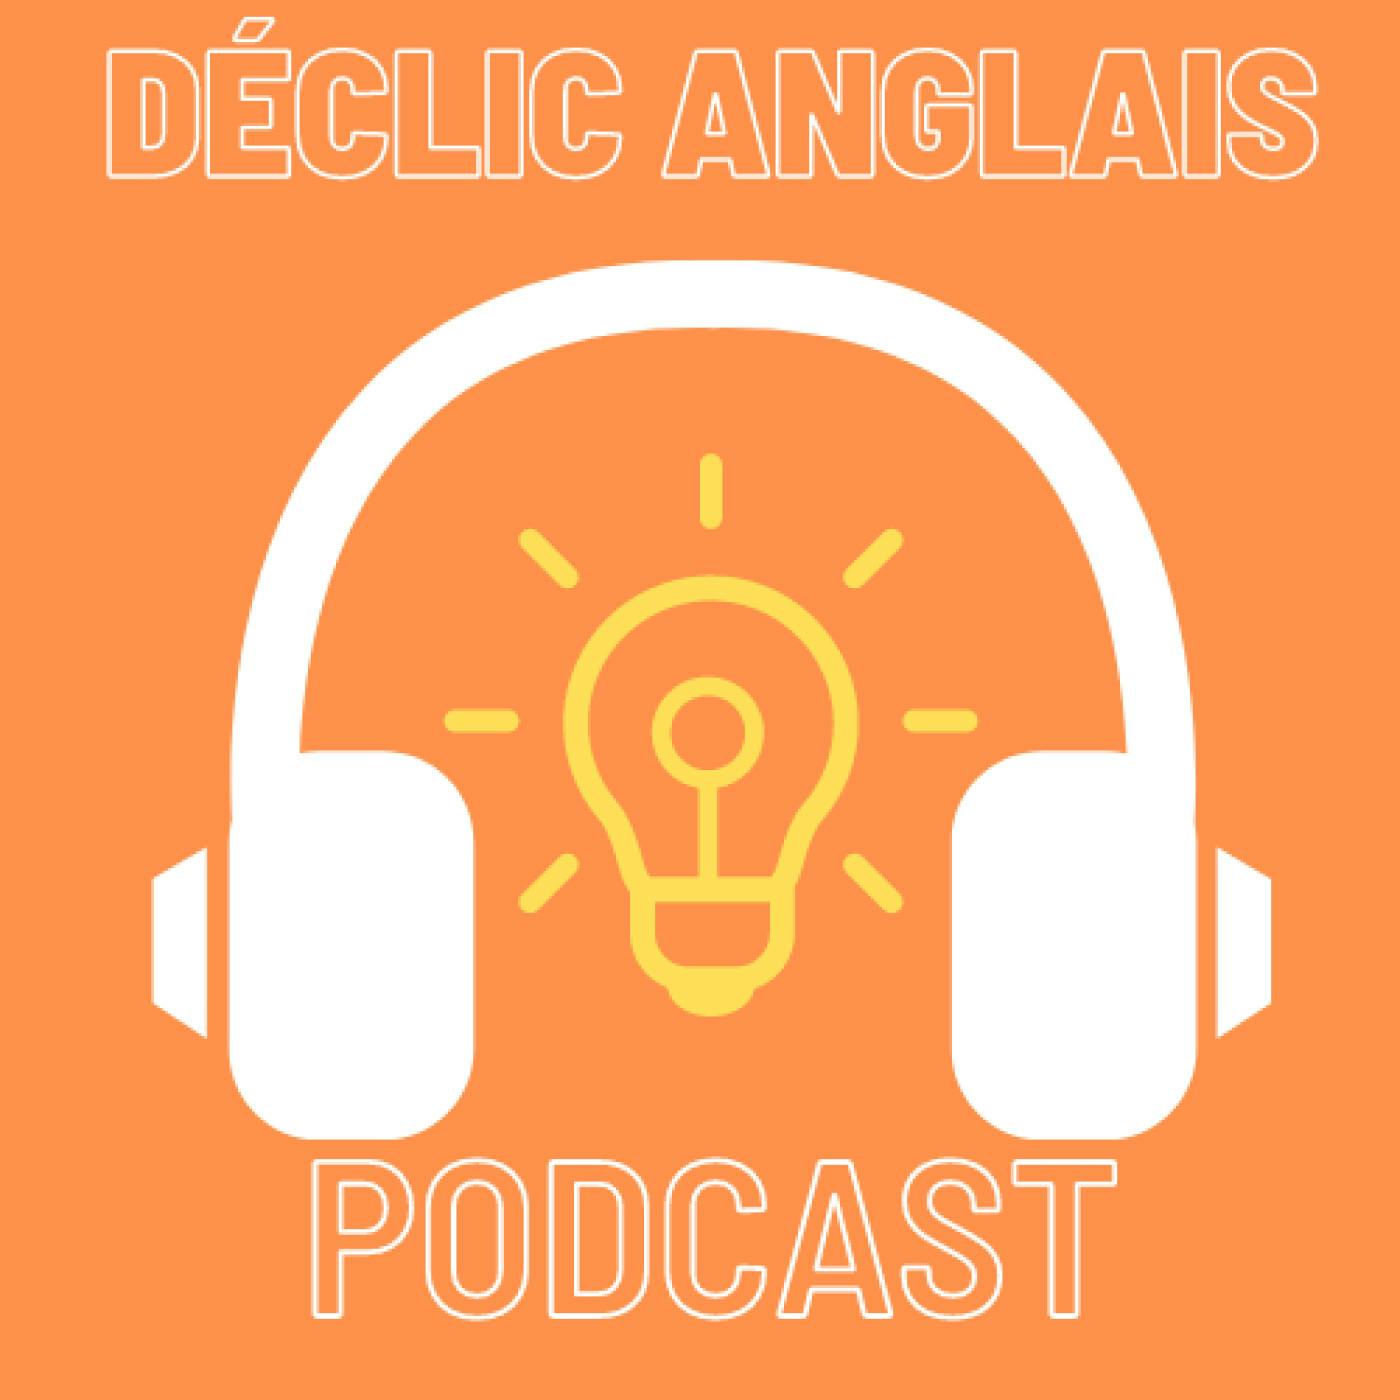 The Déclic Anglais Podcast:The Déclic Anglais Podcast